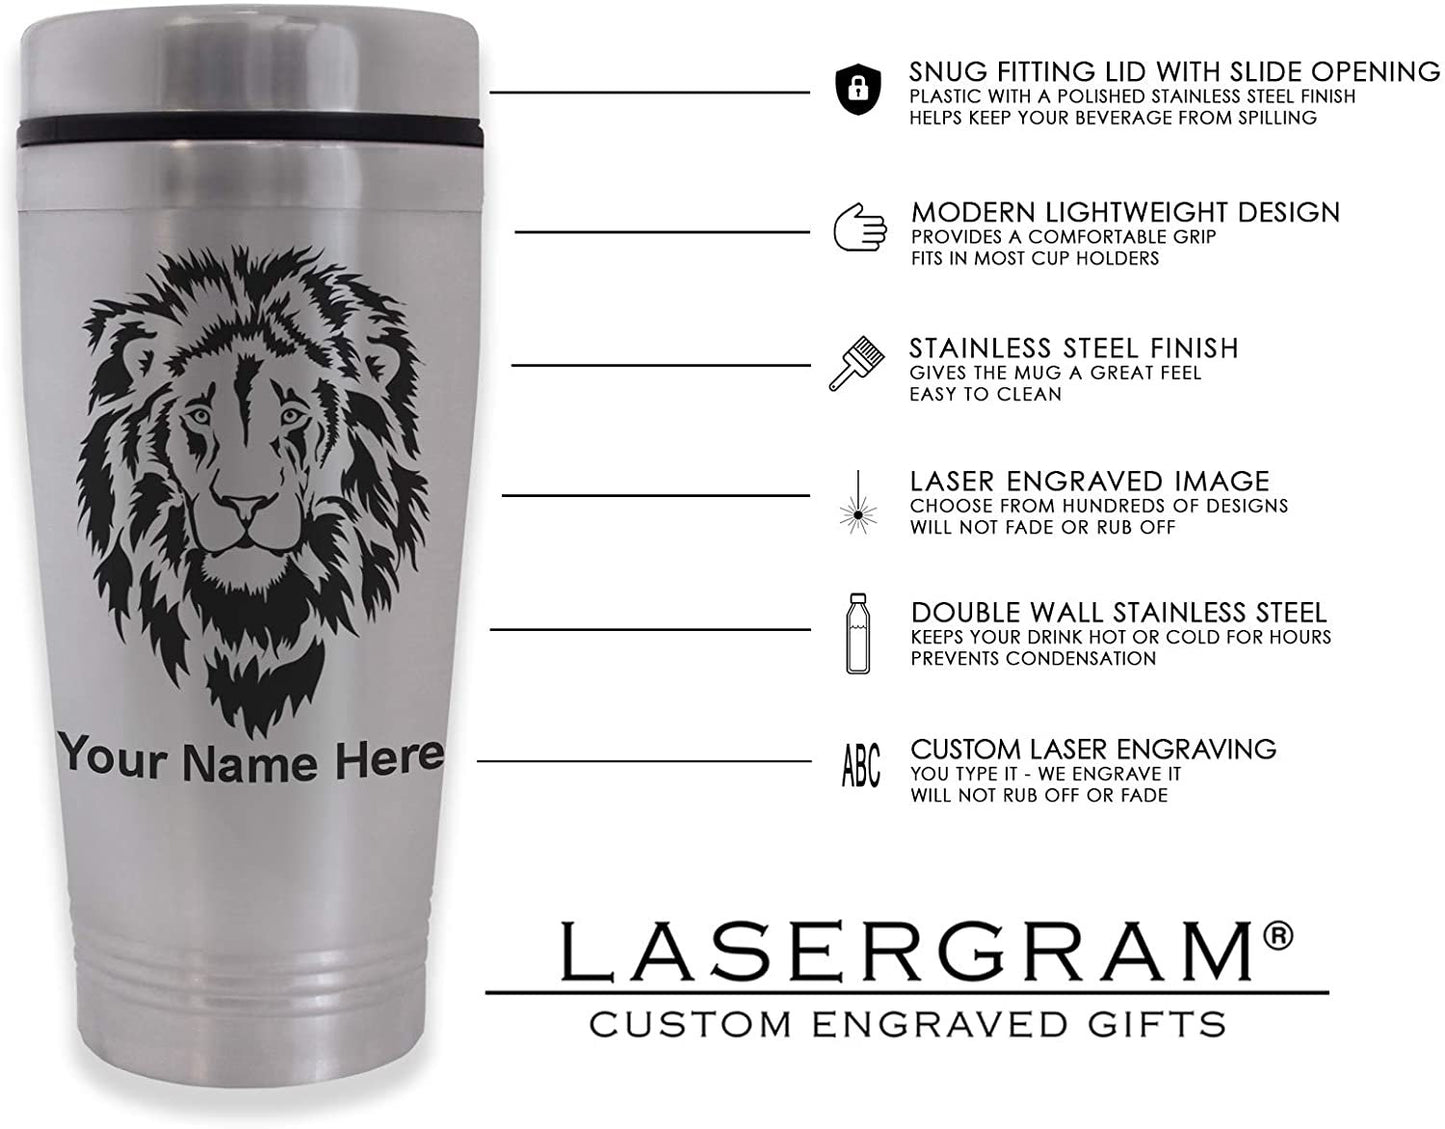 Commuter Travel Mug, Koala Bear, Personalized Engraving Included